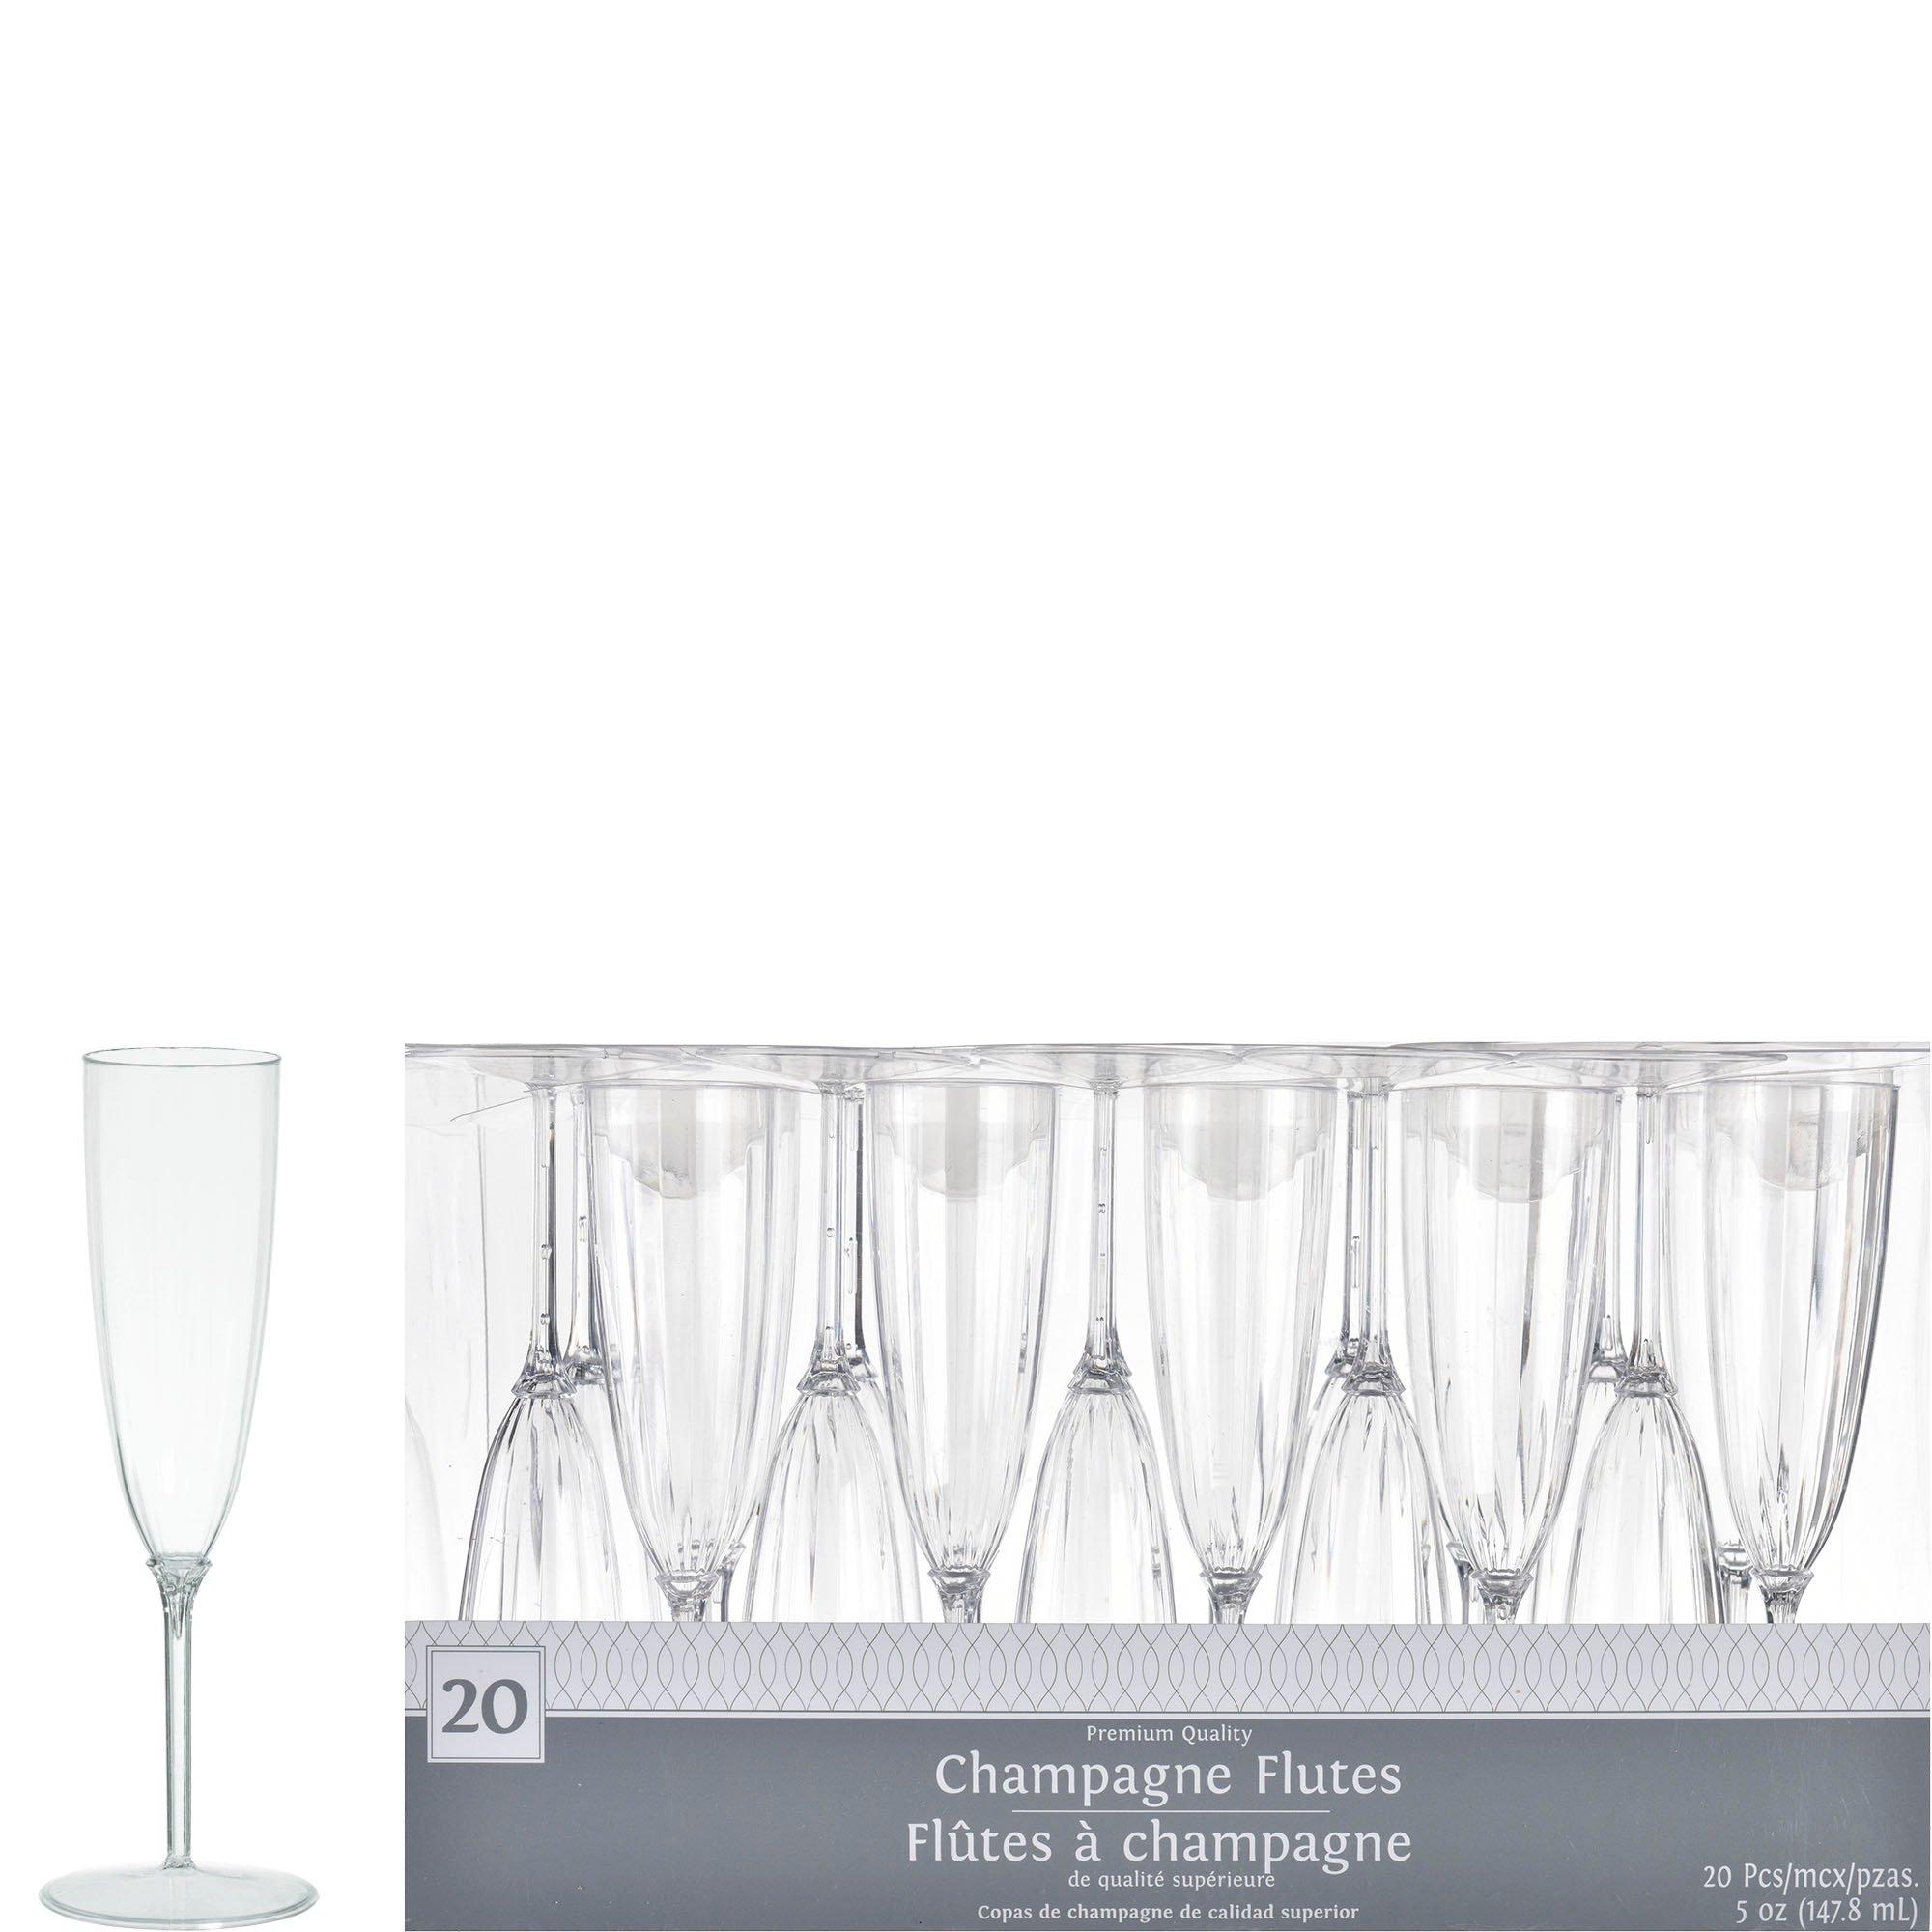 Clear Premium Plastic Stemless Wine Glasses, 12oz, 20ct